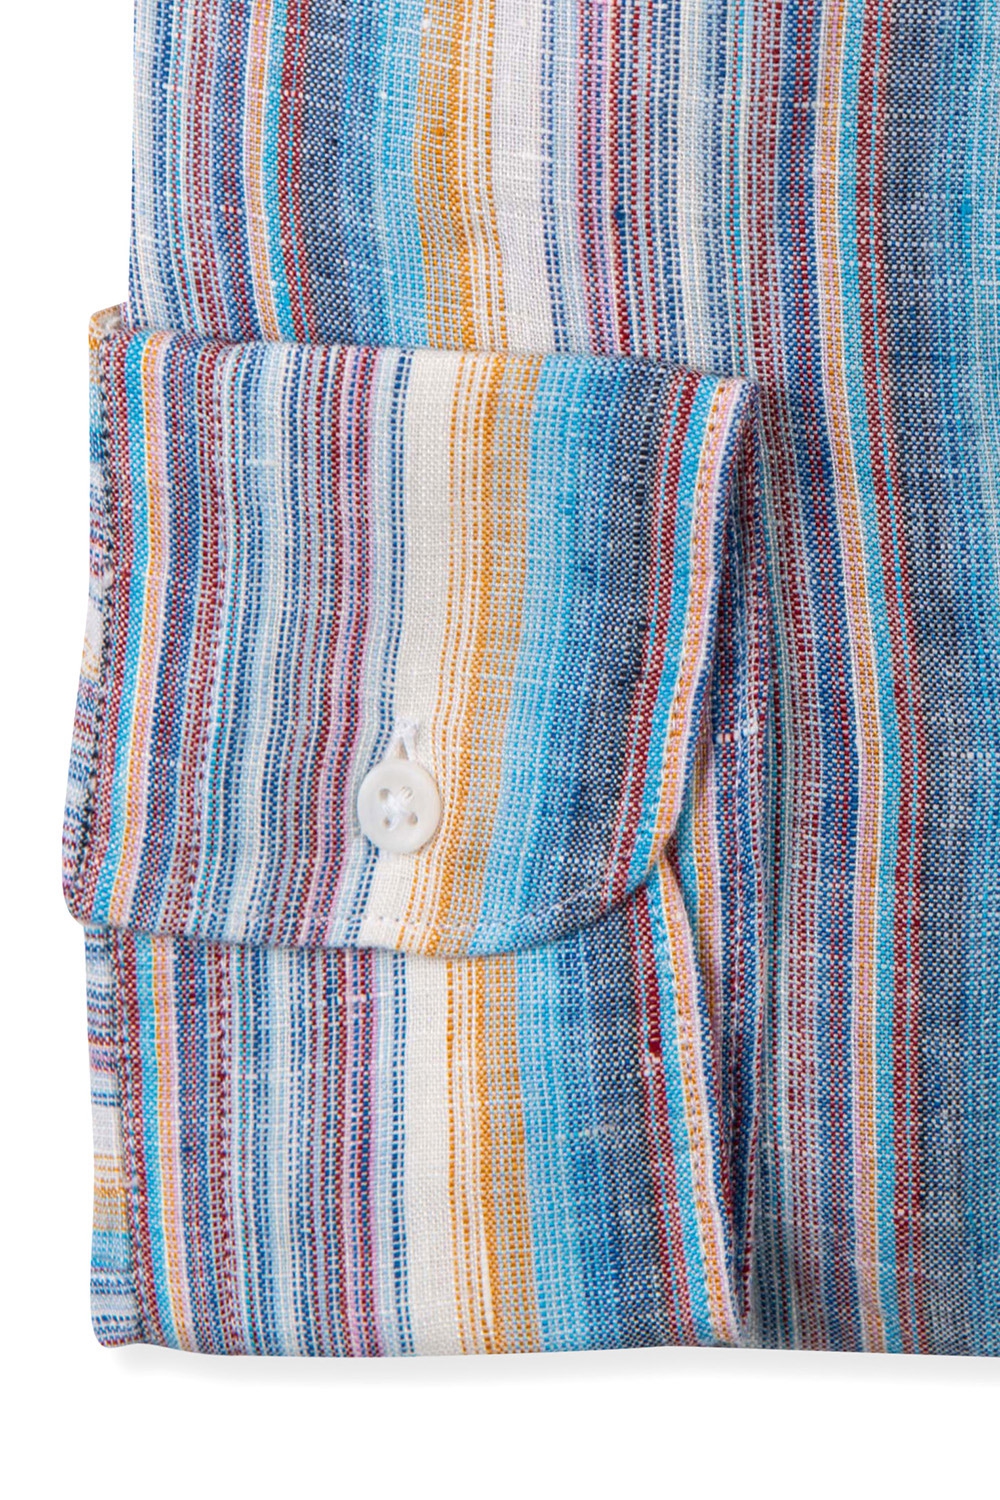 Camasa Shaped din in Multicolora cu Dungi 2